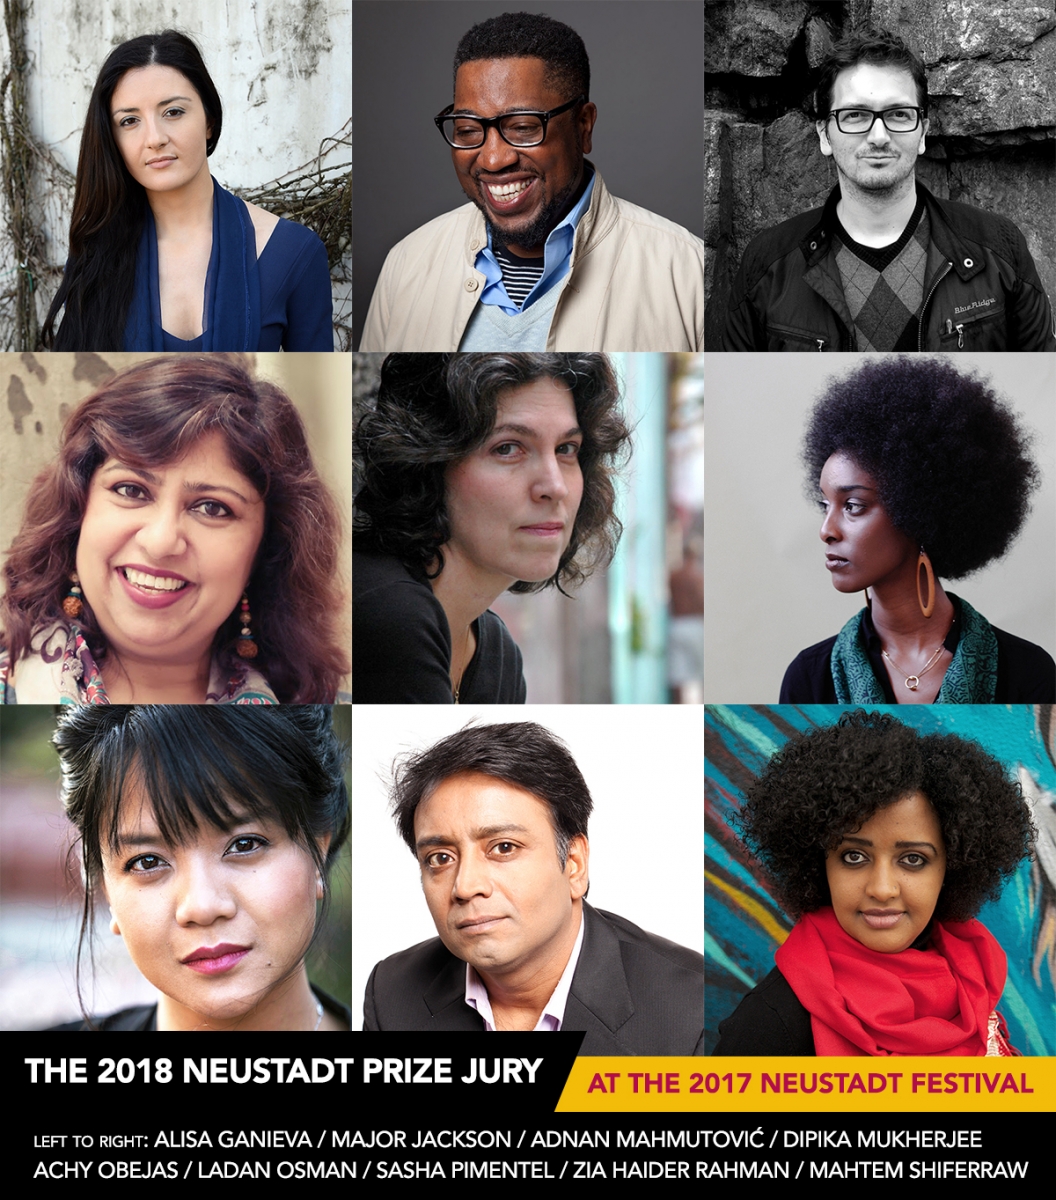 2018 Neustadt Prize jury